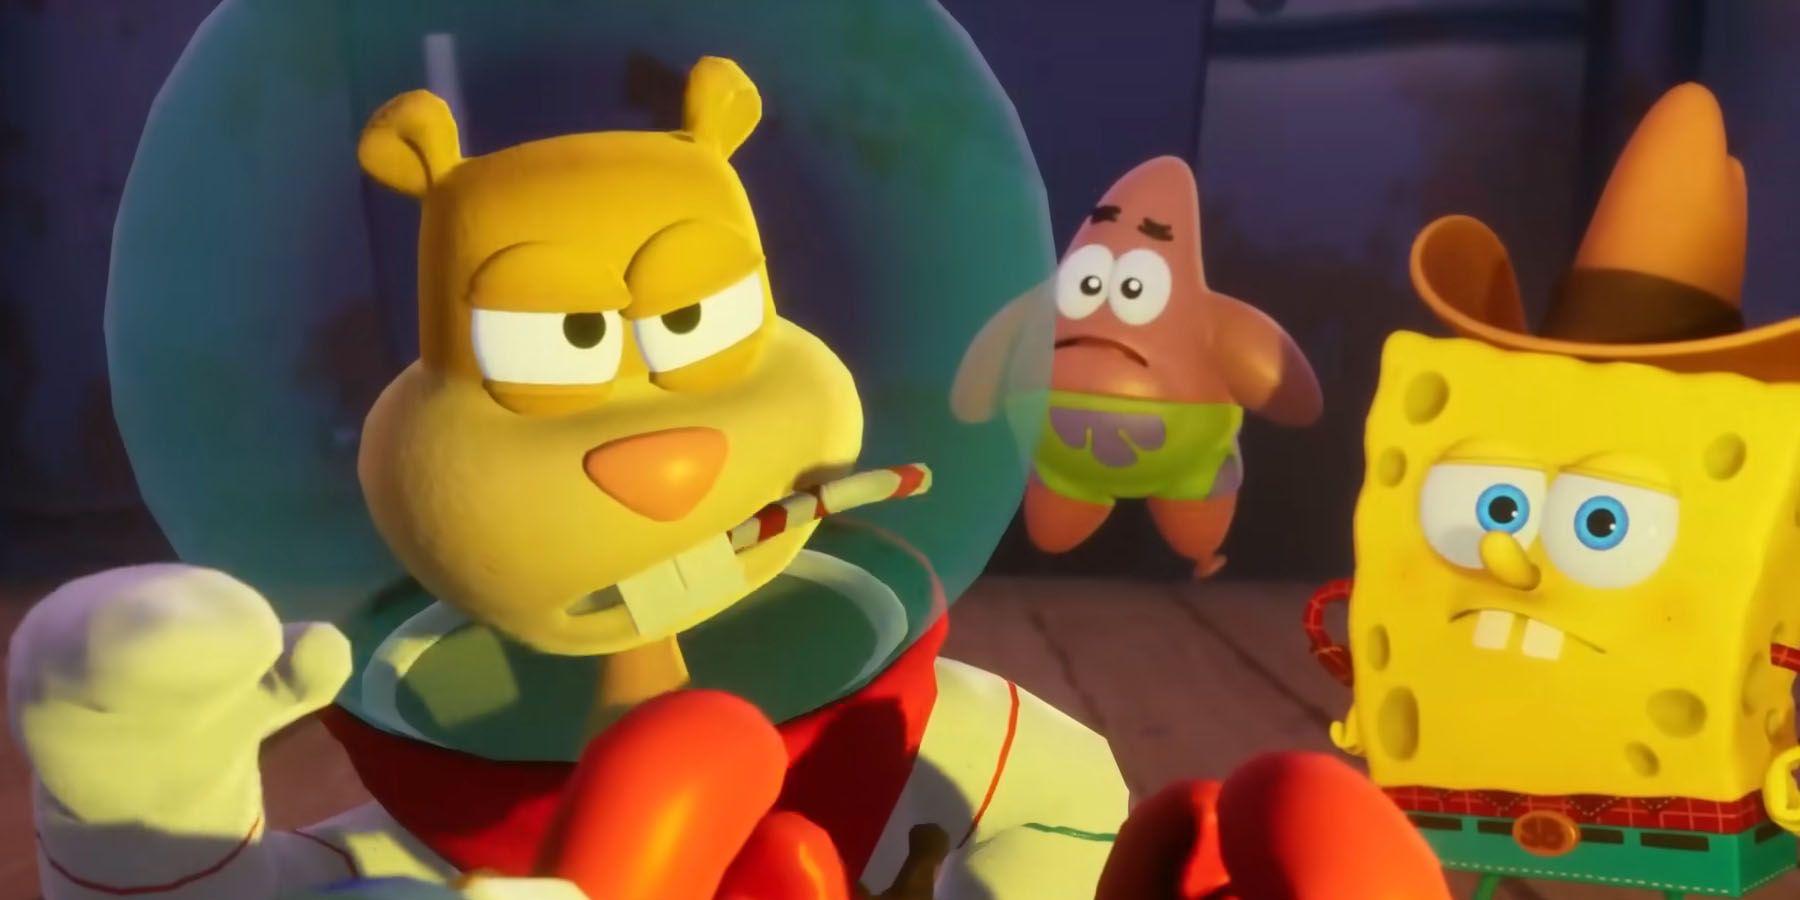 Purple Lamp Studios Wants to Do More SpongeBob Games After Cosmic Shake